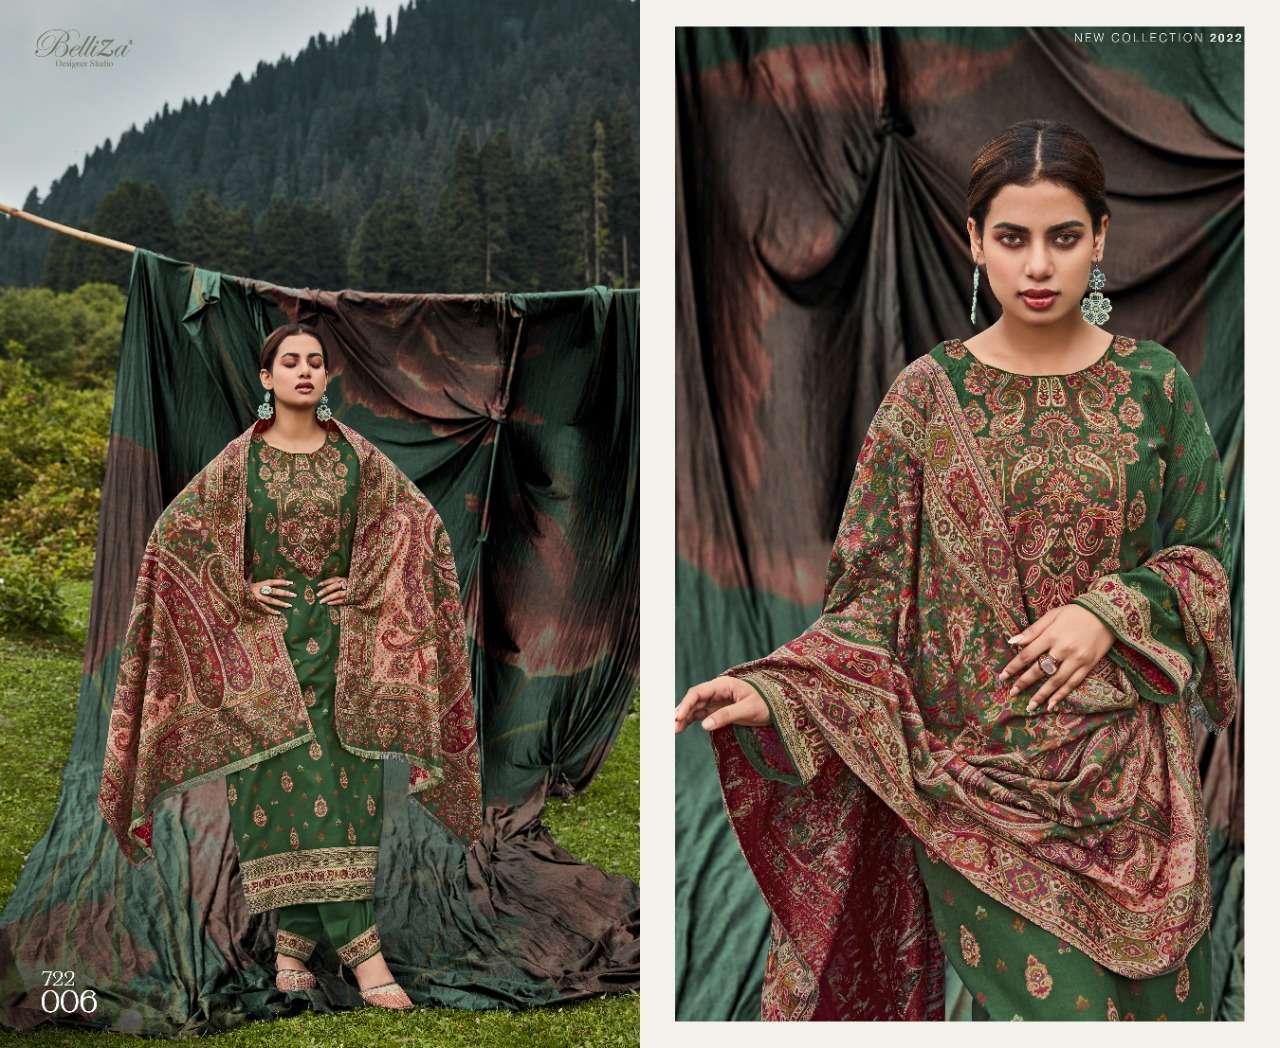 belliza designer studio rumi wool pashmina elegant salwar suit catalog